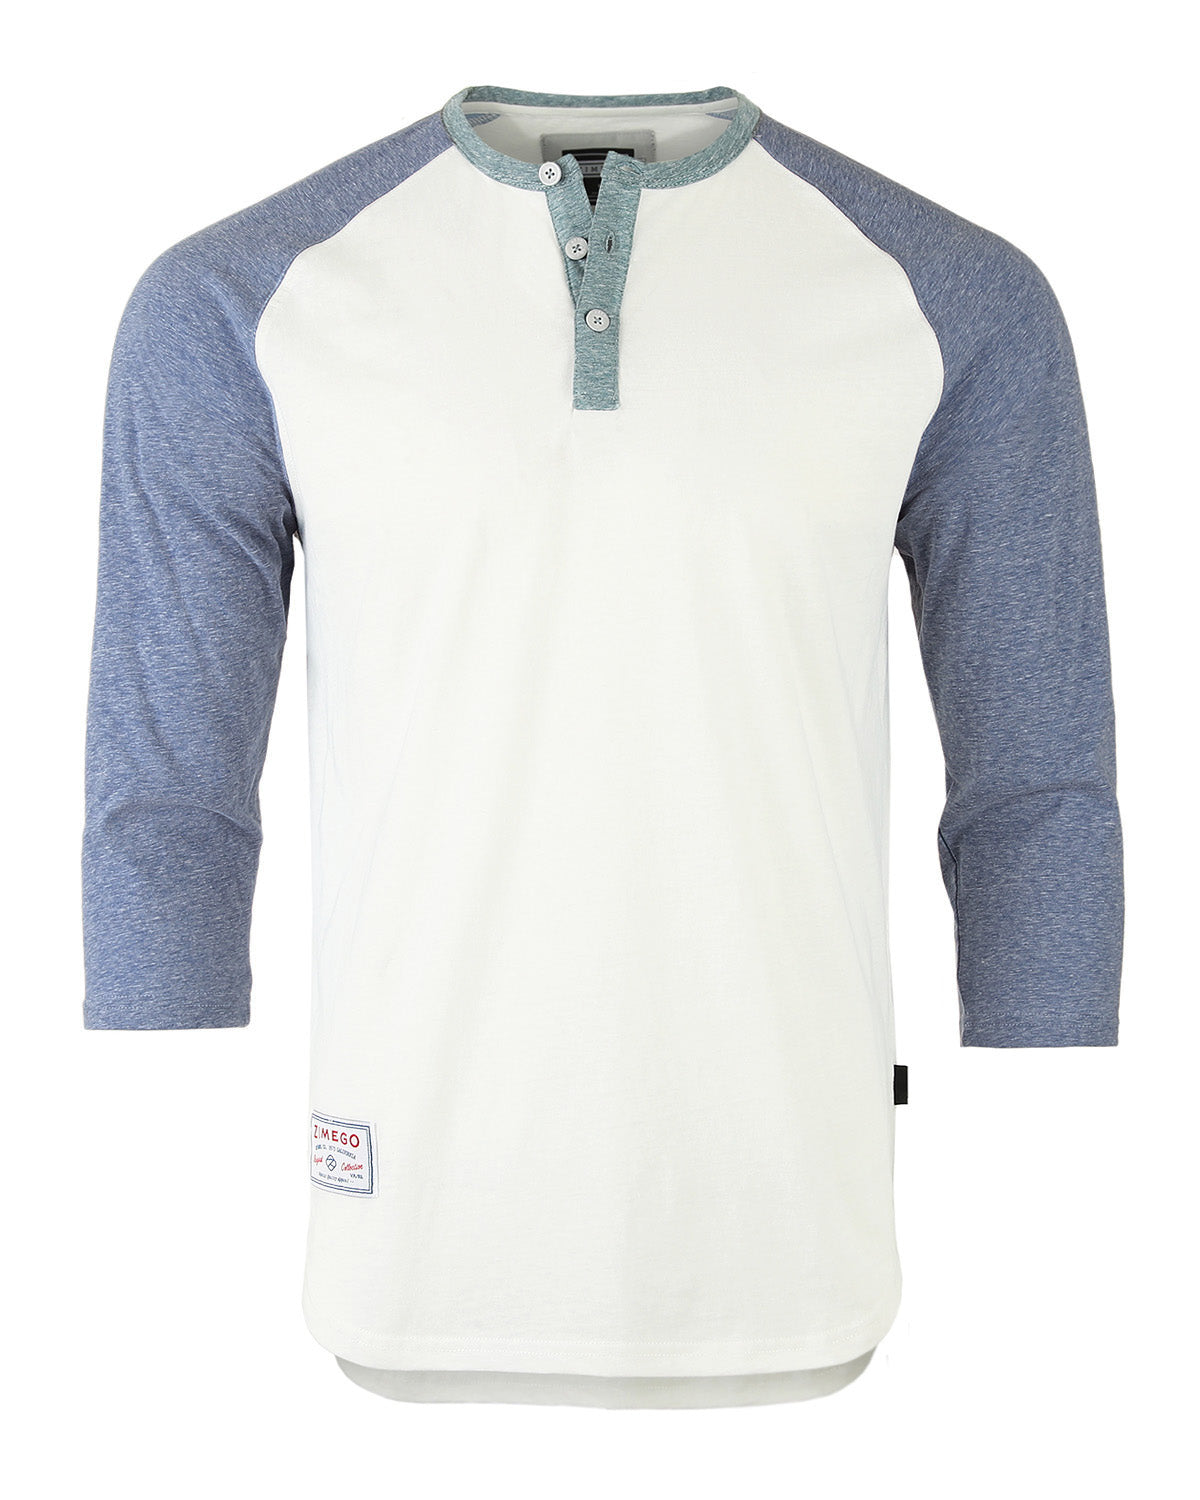 Men's 3/4 Sleeve Baseball Retro Raglan Henley Shirts